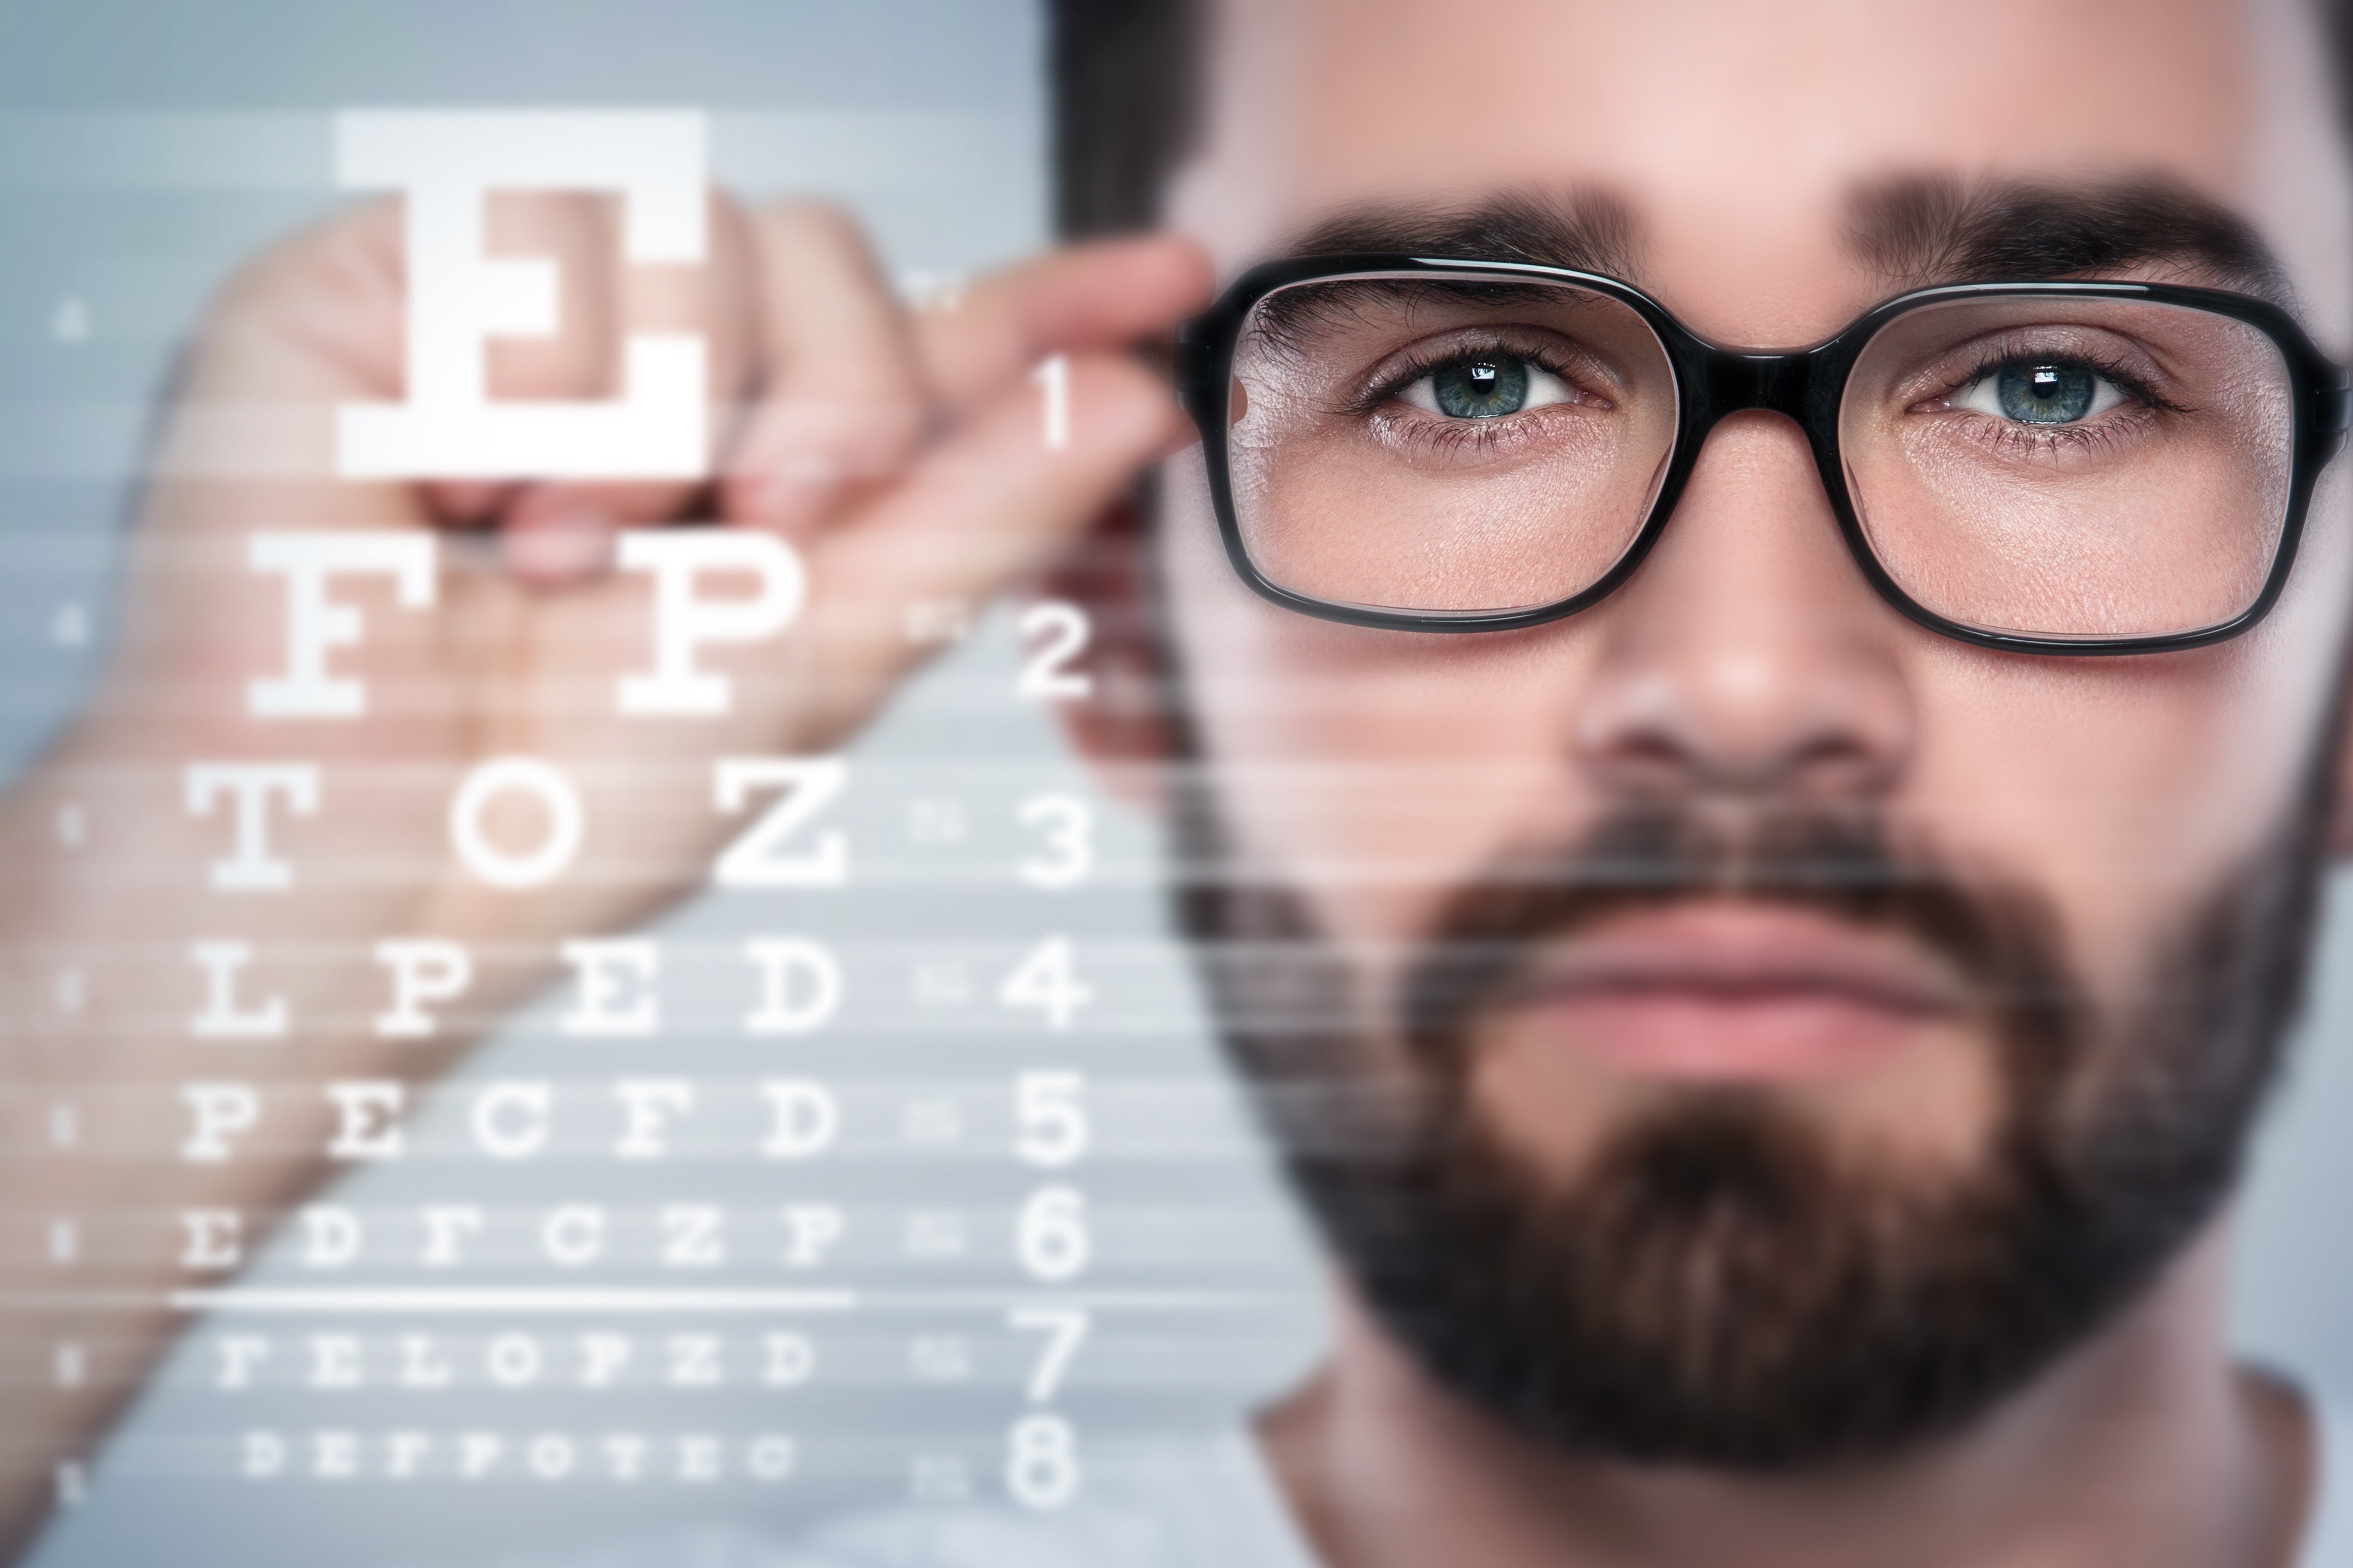 How to Get Good Eyesight?